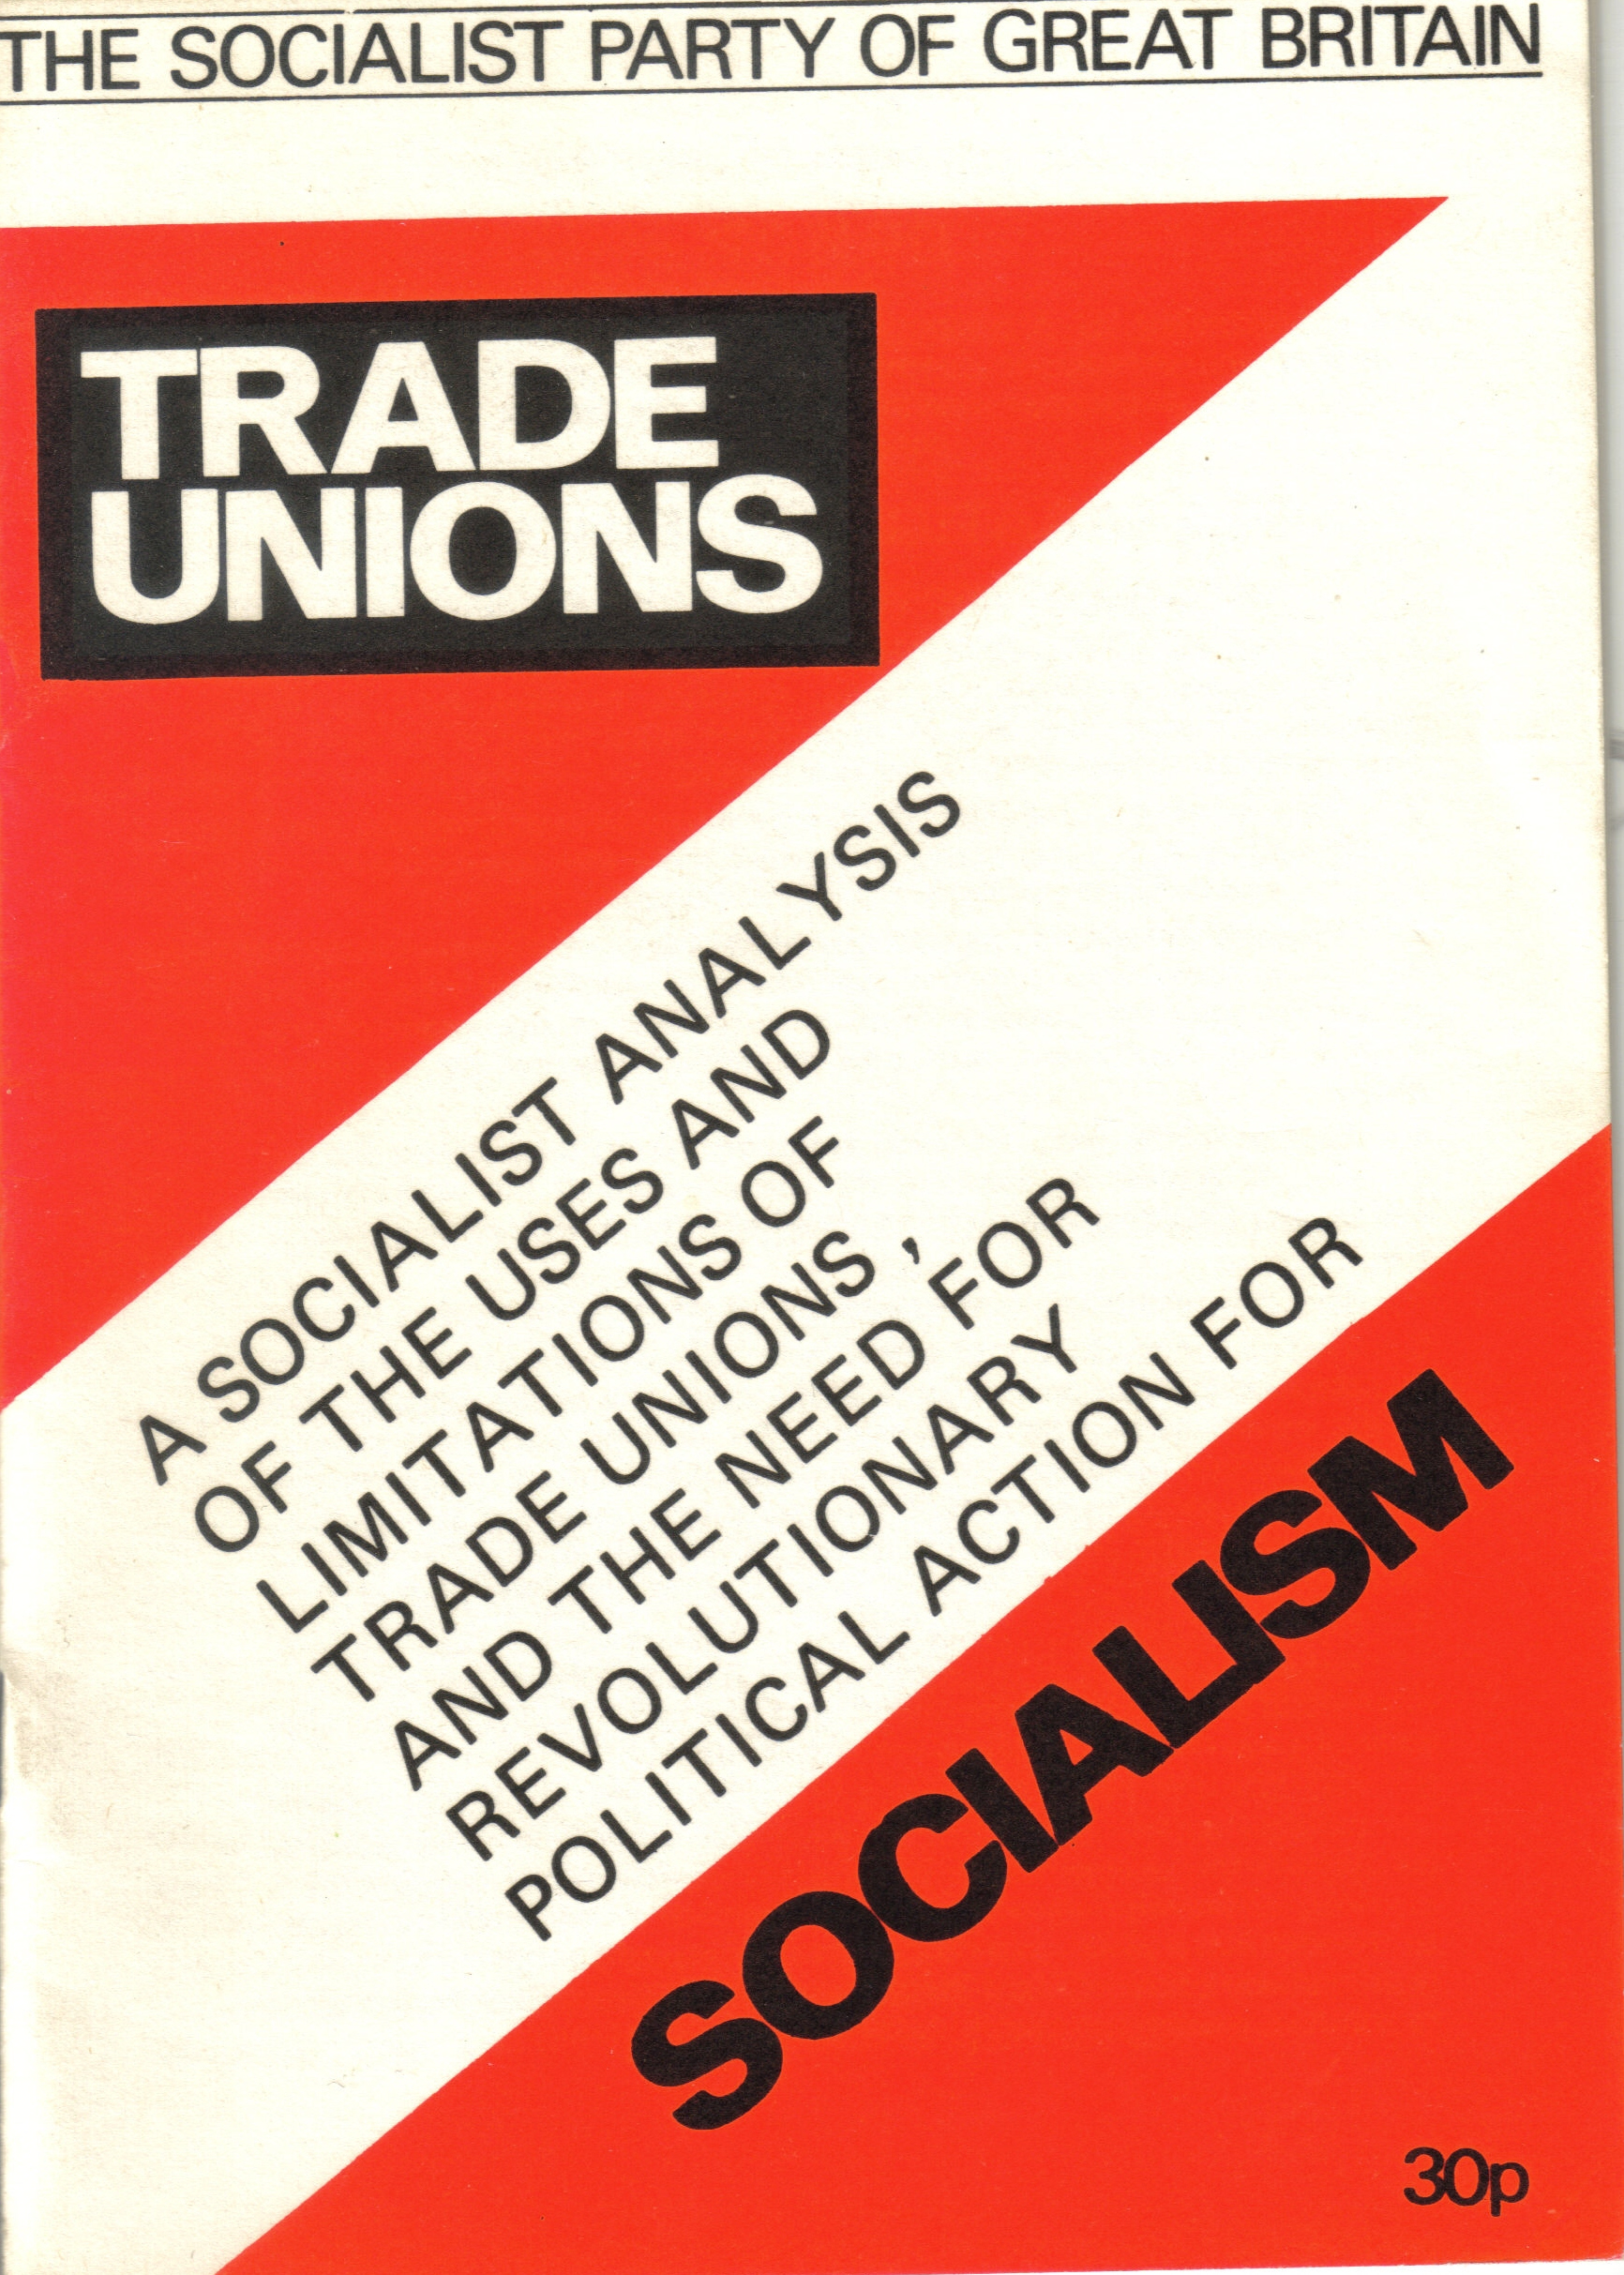 Trade Unions – worldsocialism.org/spgb